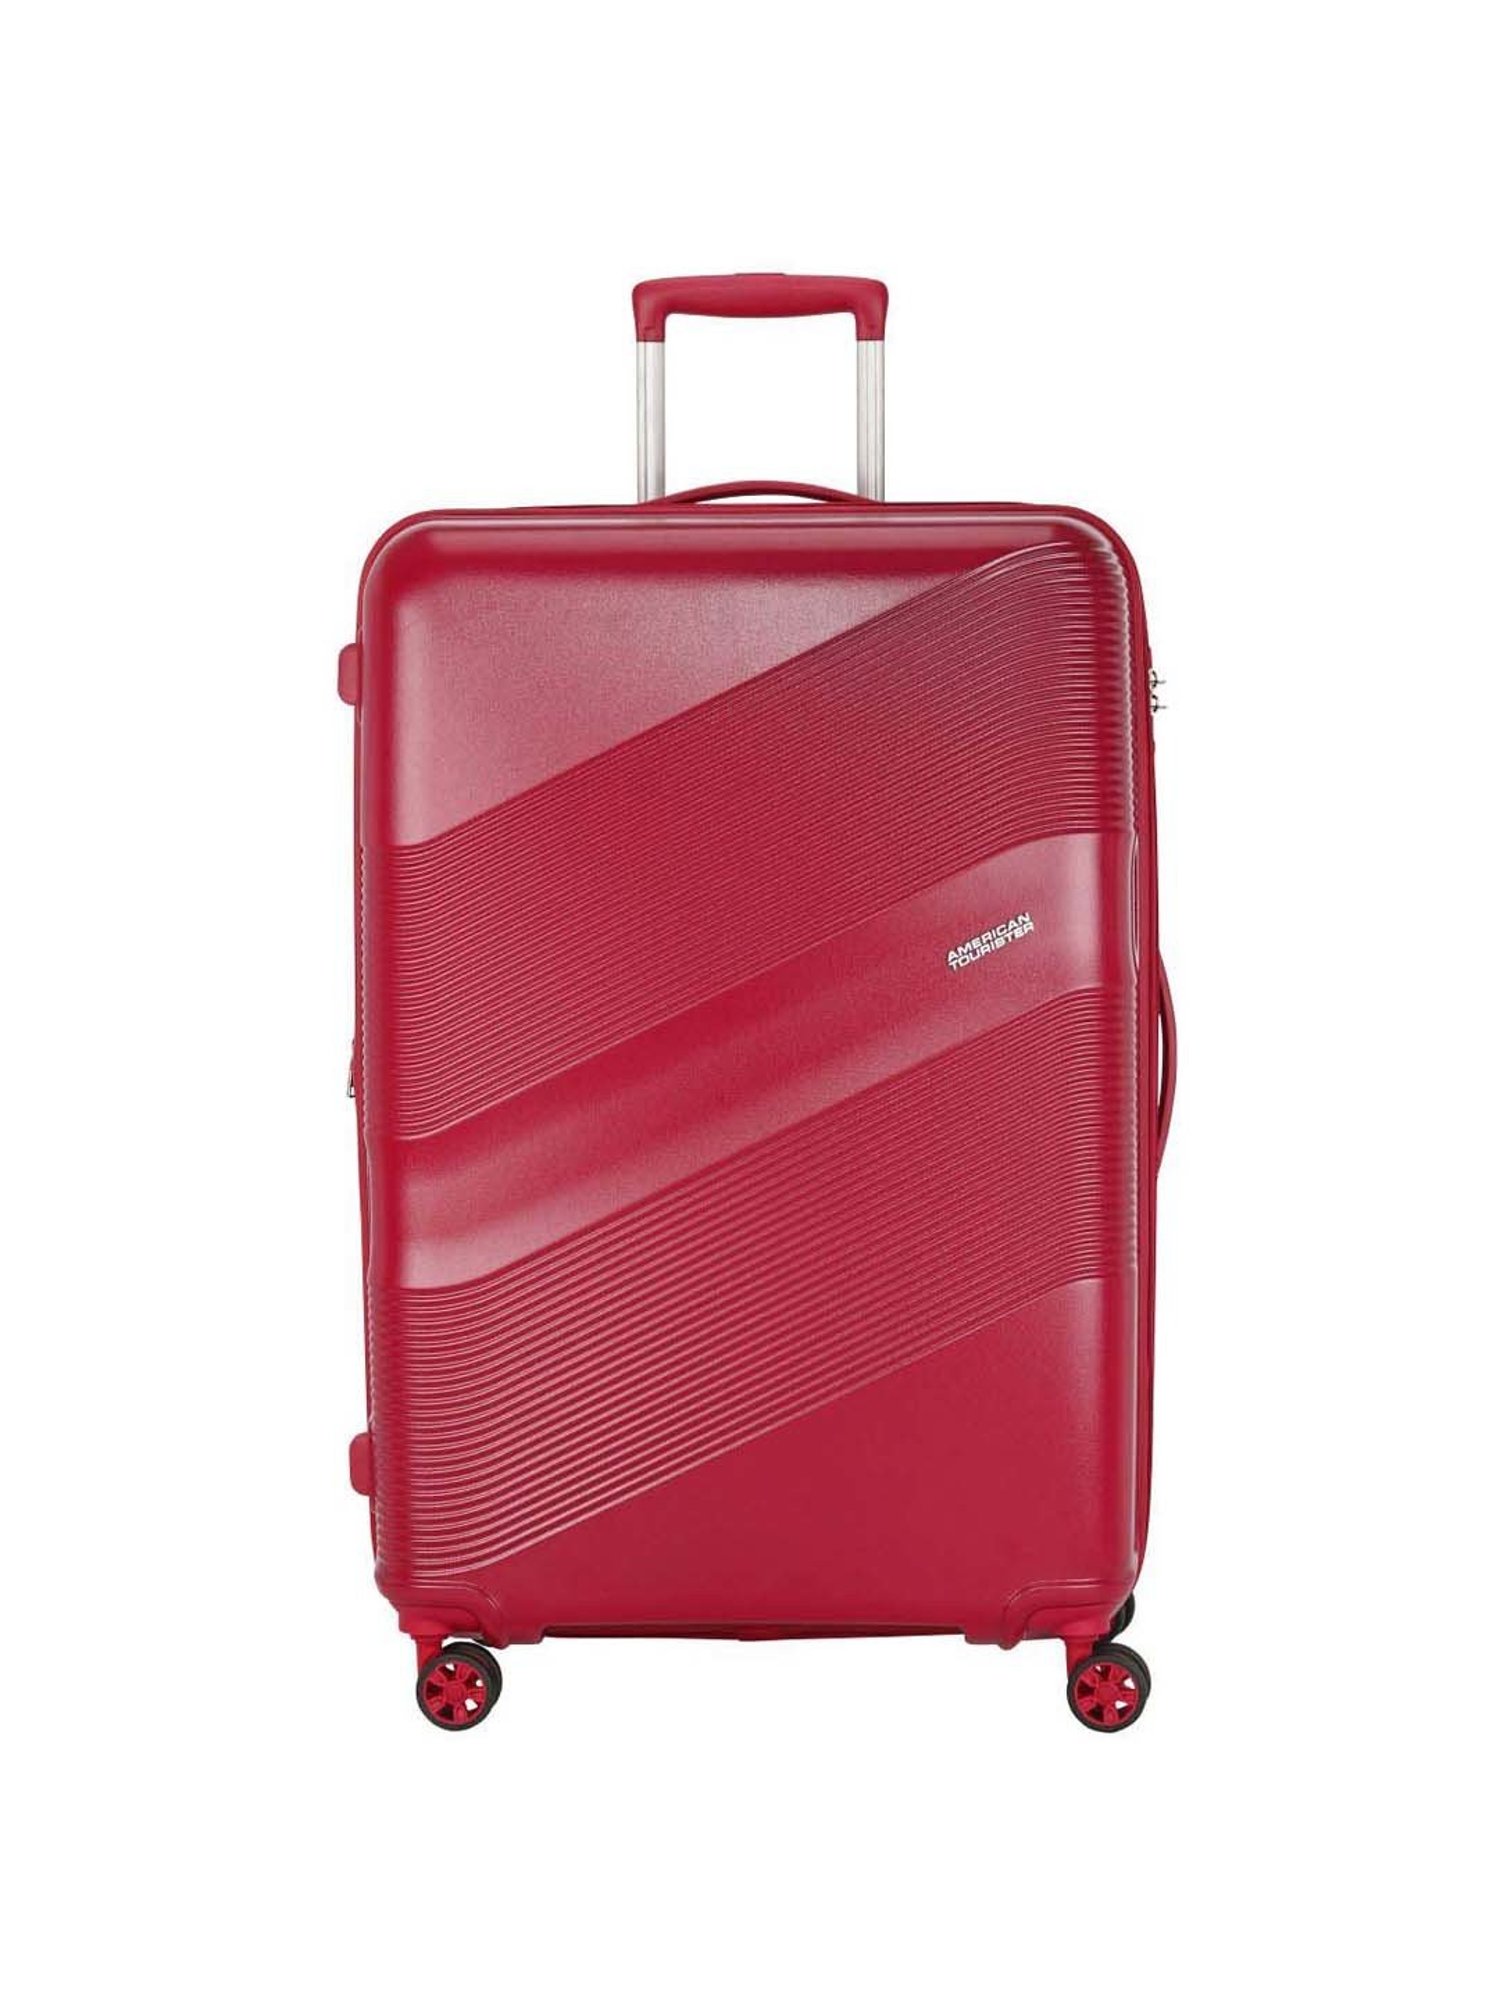 American Tourister POP Max 3 Piece Softside Luggage Set - Walmart.com